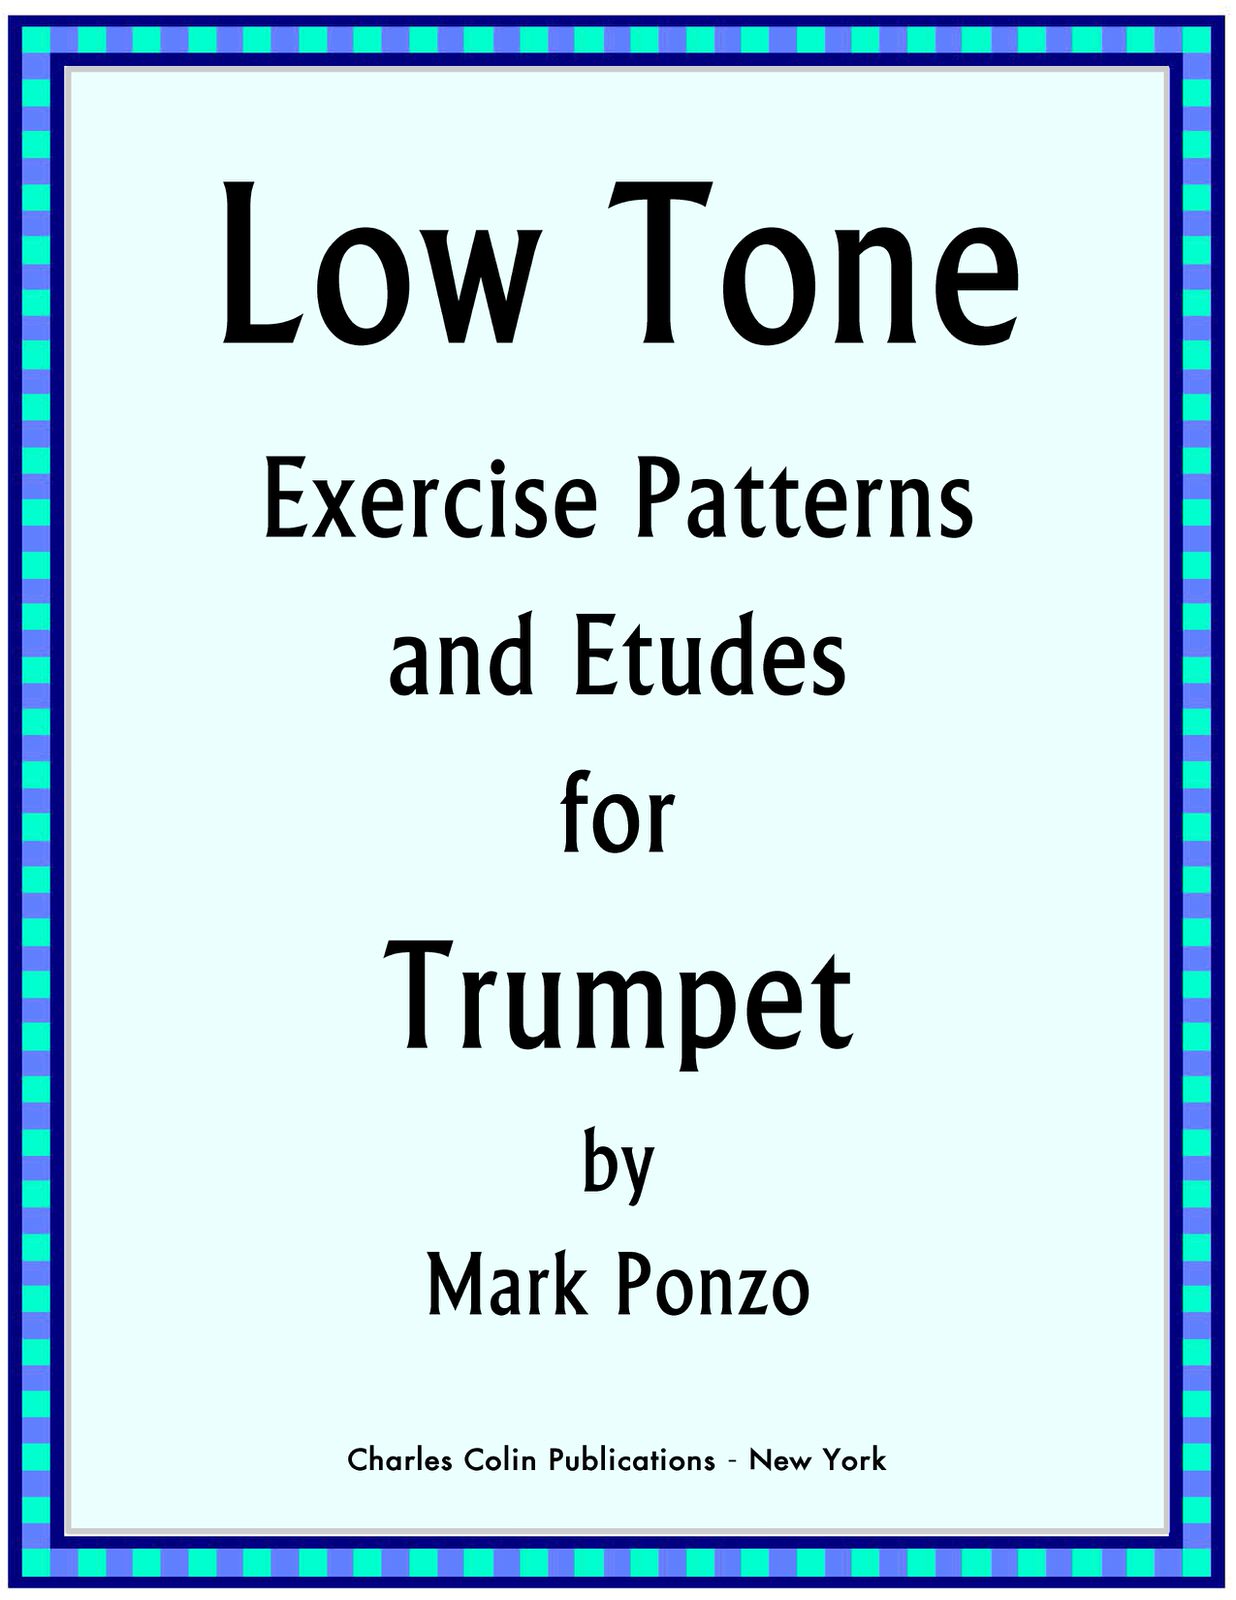 Low tone